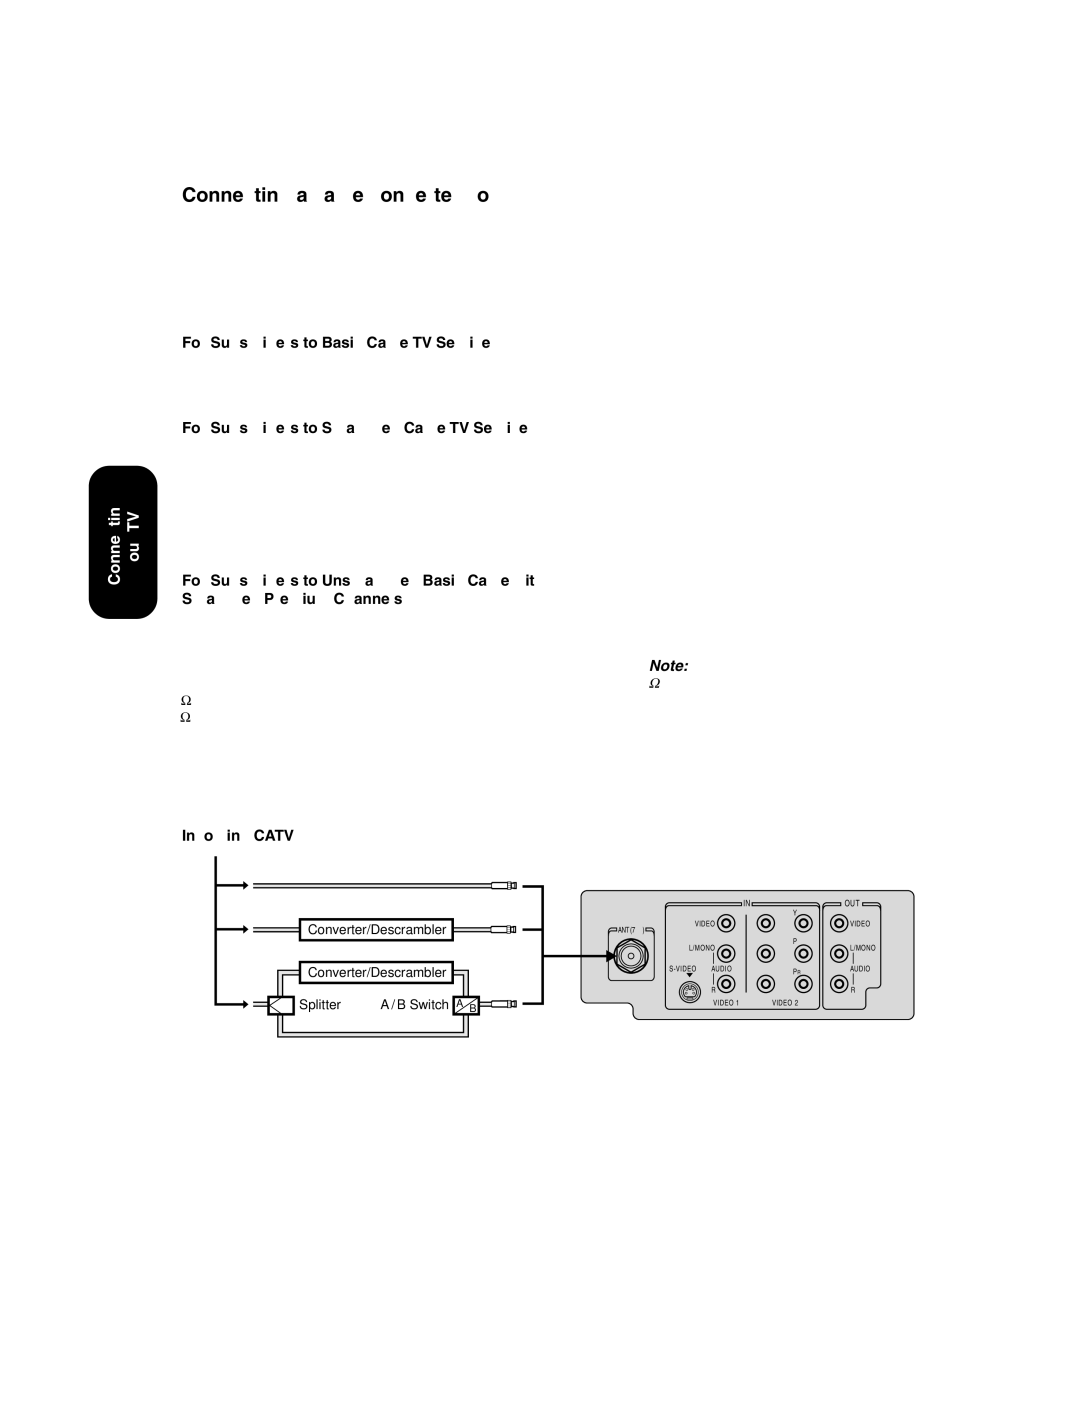 Toshiba 27AF53 appendix Connecting a cable converter box, Converter/Descrambler Splitter Switch a B 